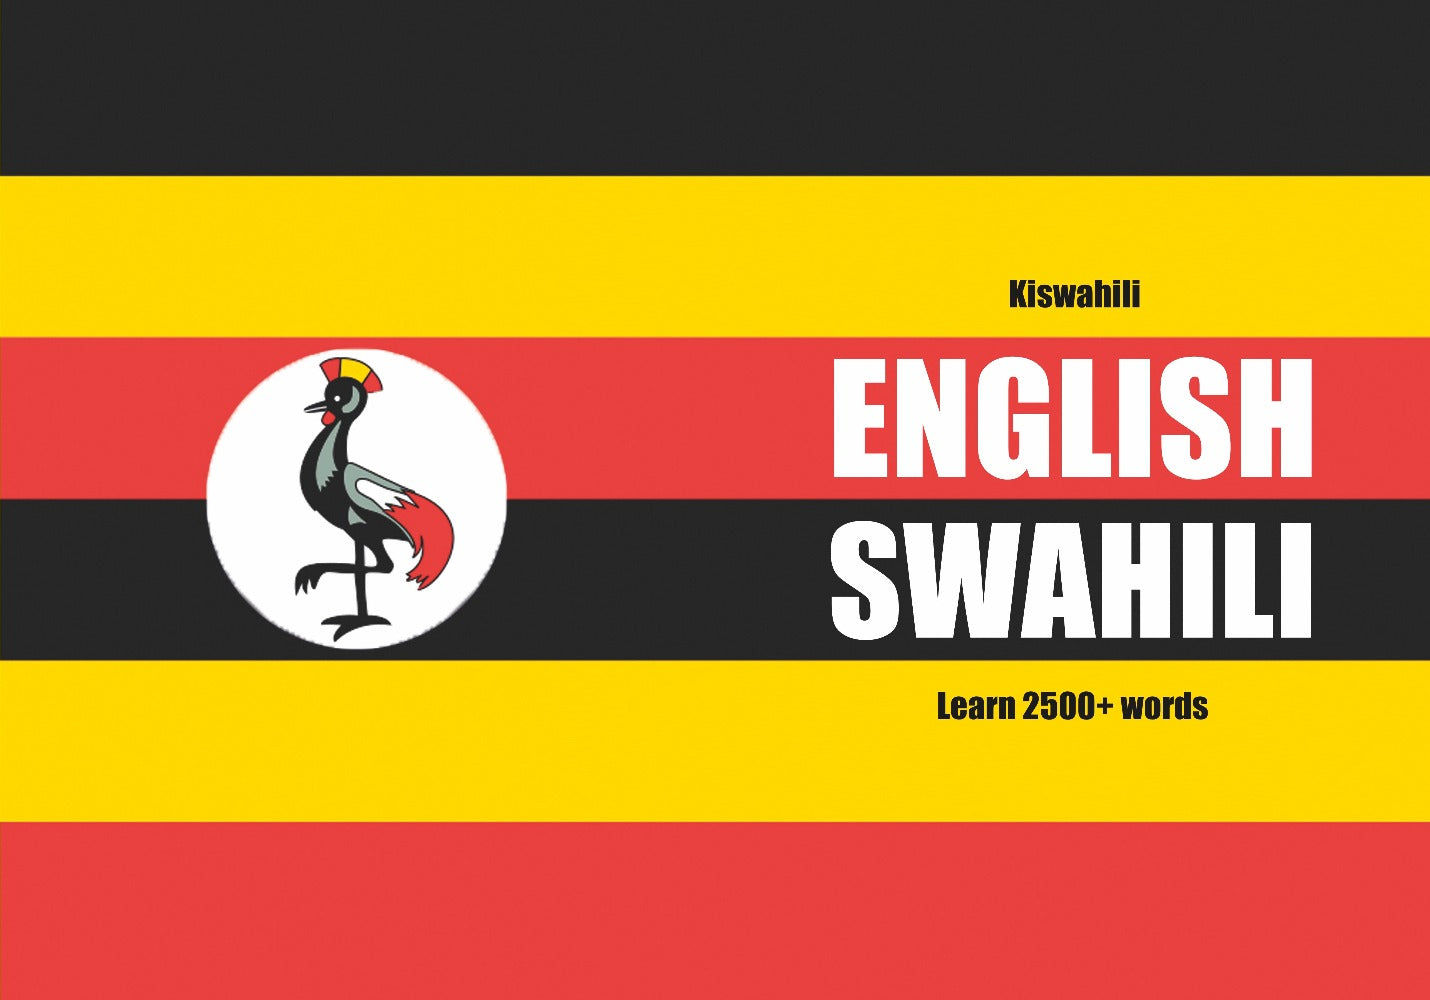 Swahili (Uganda) language notebook cover